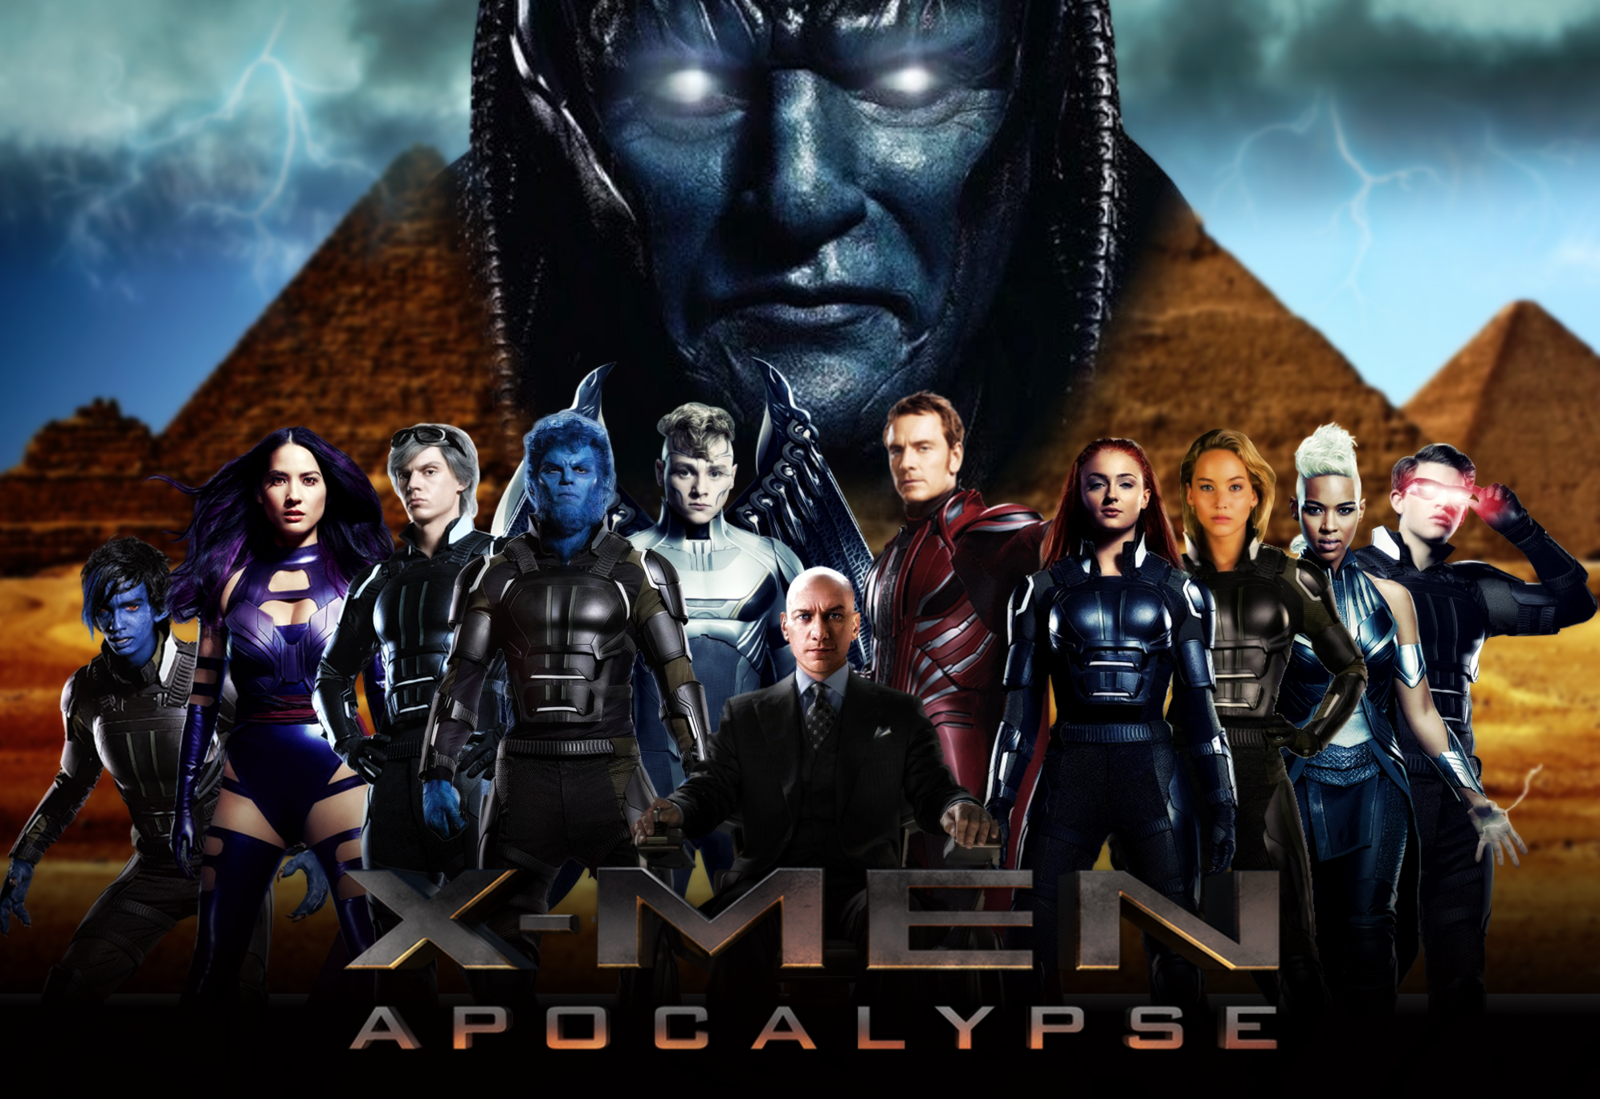 x men apocalypse free movie stream download